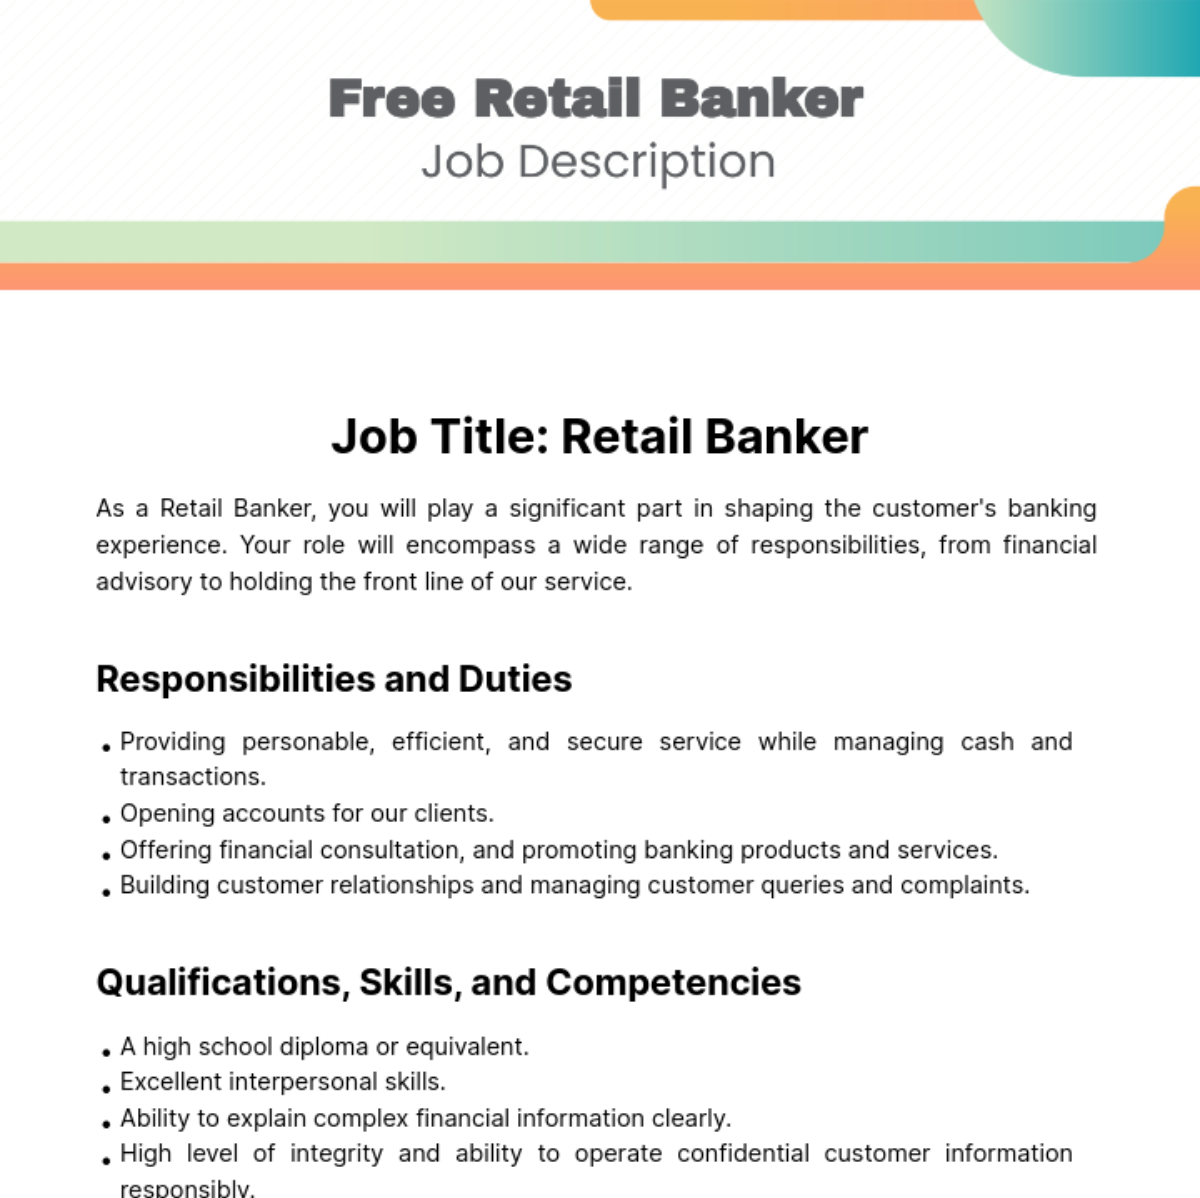 Free Retail Banker Job Description Template